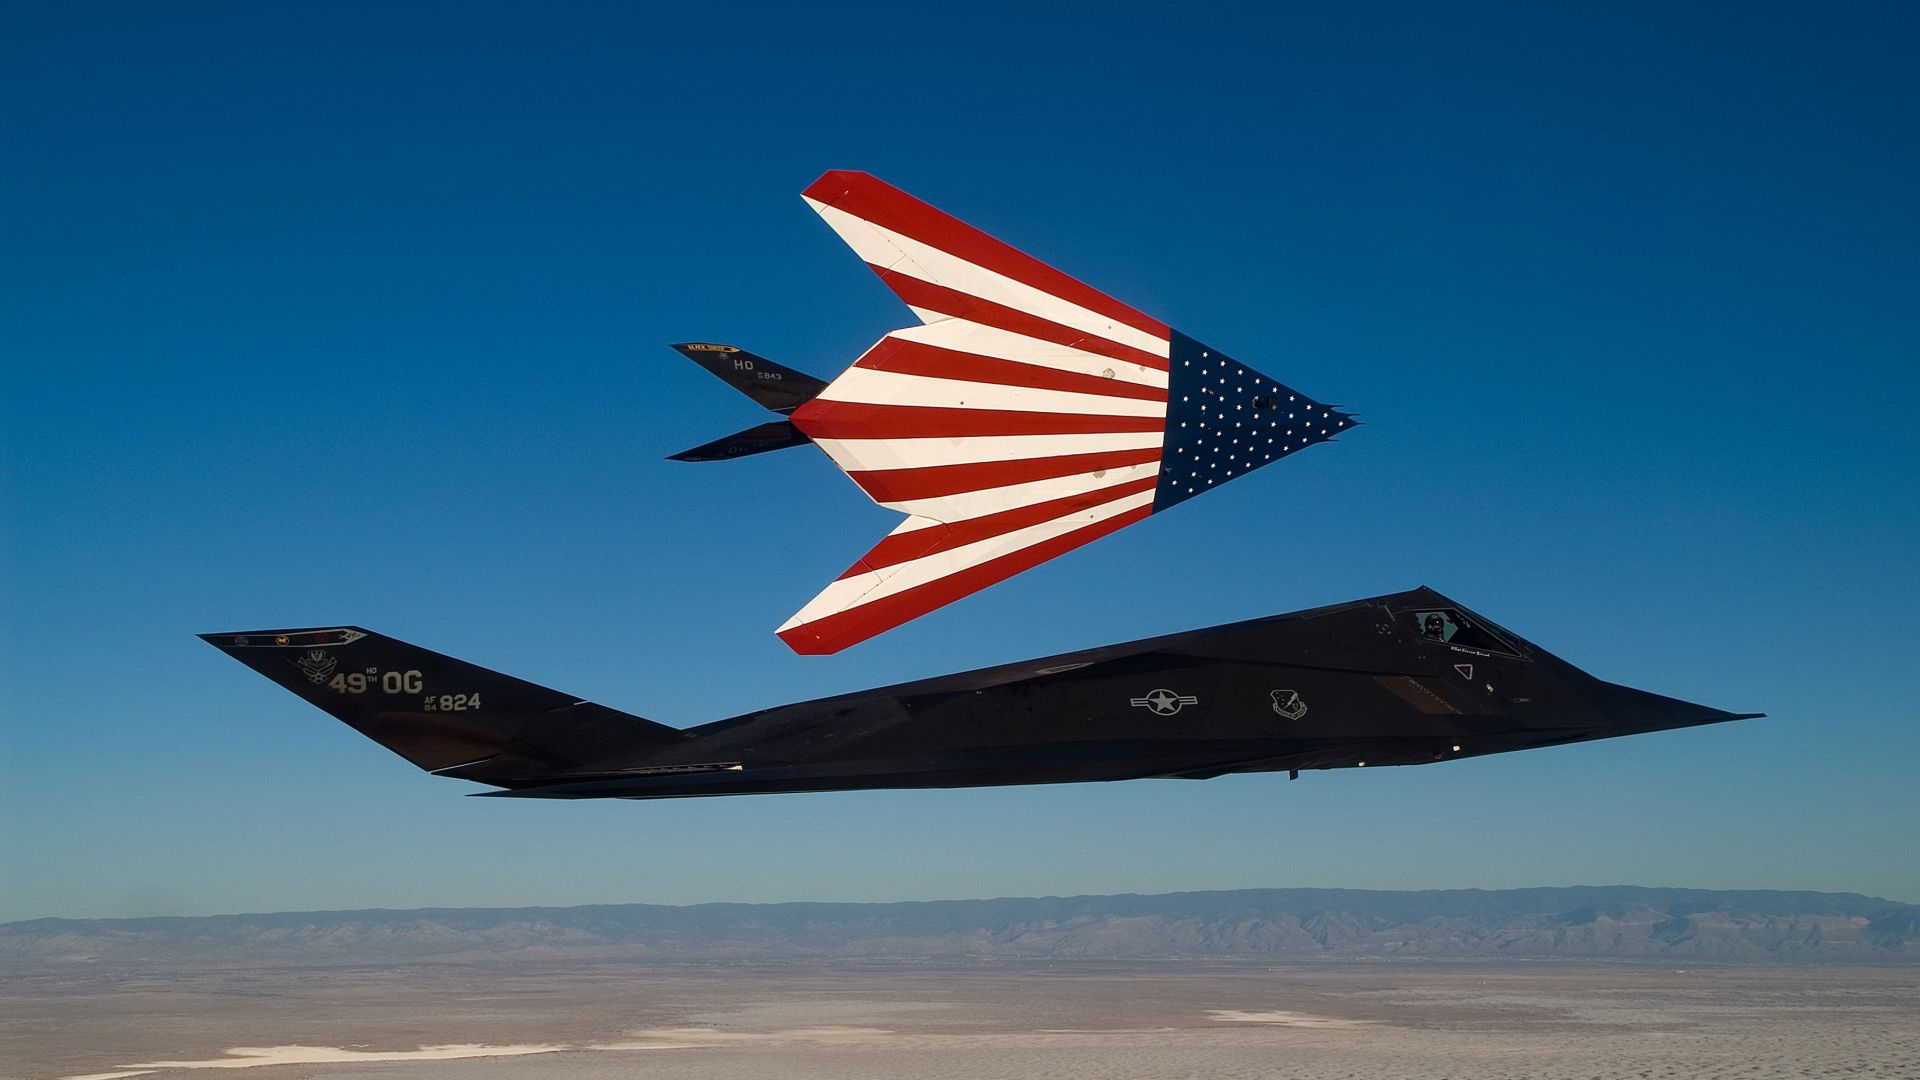 Ф-117, Локхид, ВВС США, истребитель, Армия США, F-117 Nighthawk, Lockheed, US Air Force, USA Army, United States Navy (horizontal)